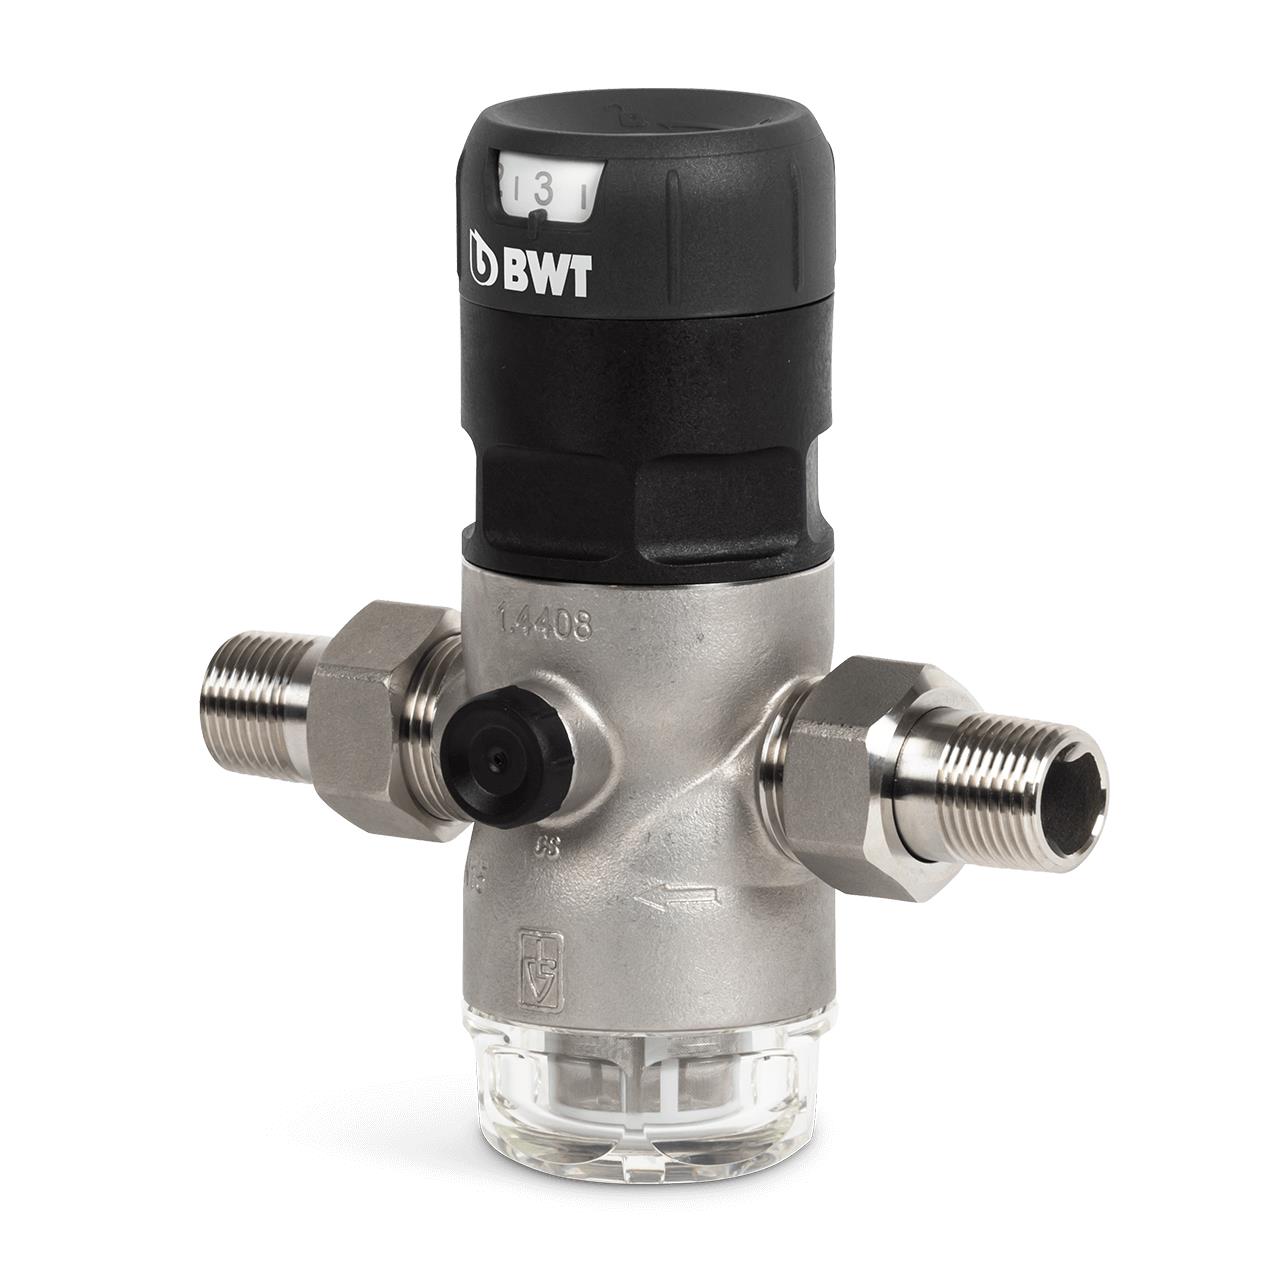 Редуктор давления воды на 16 бар BWT D1 Inox 3/4" 40.16